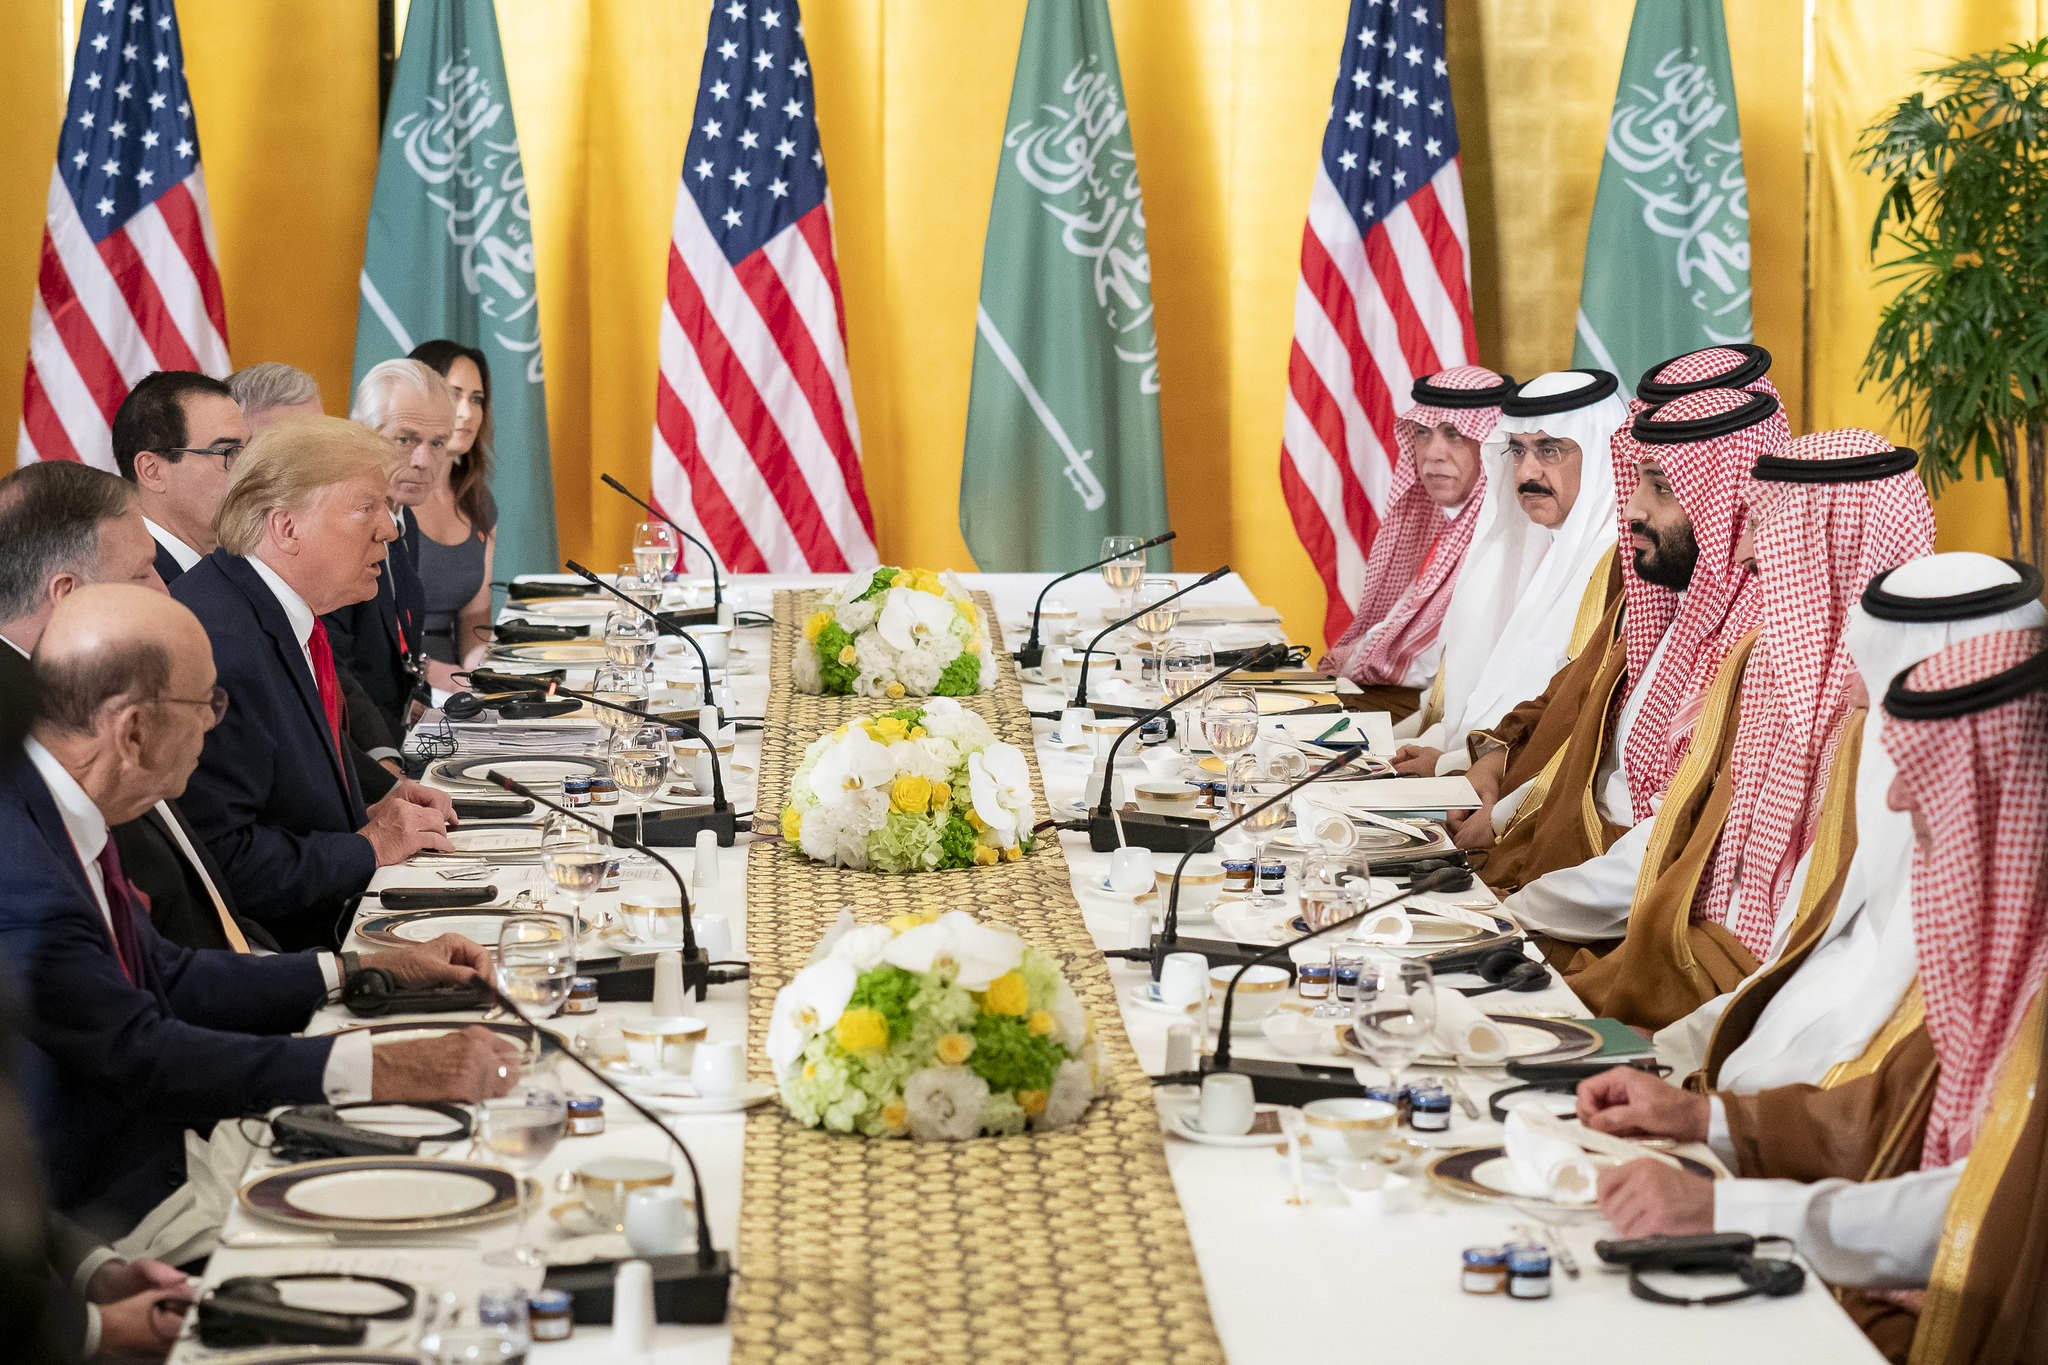 President Trump meets Crown Prince Mohammed bin Salman at the G20 Summit in Japan, June 2019.